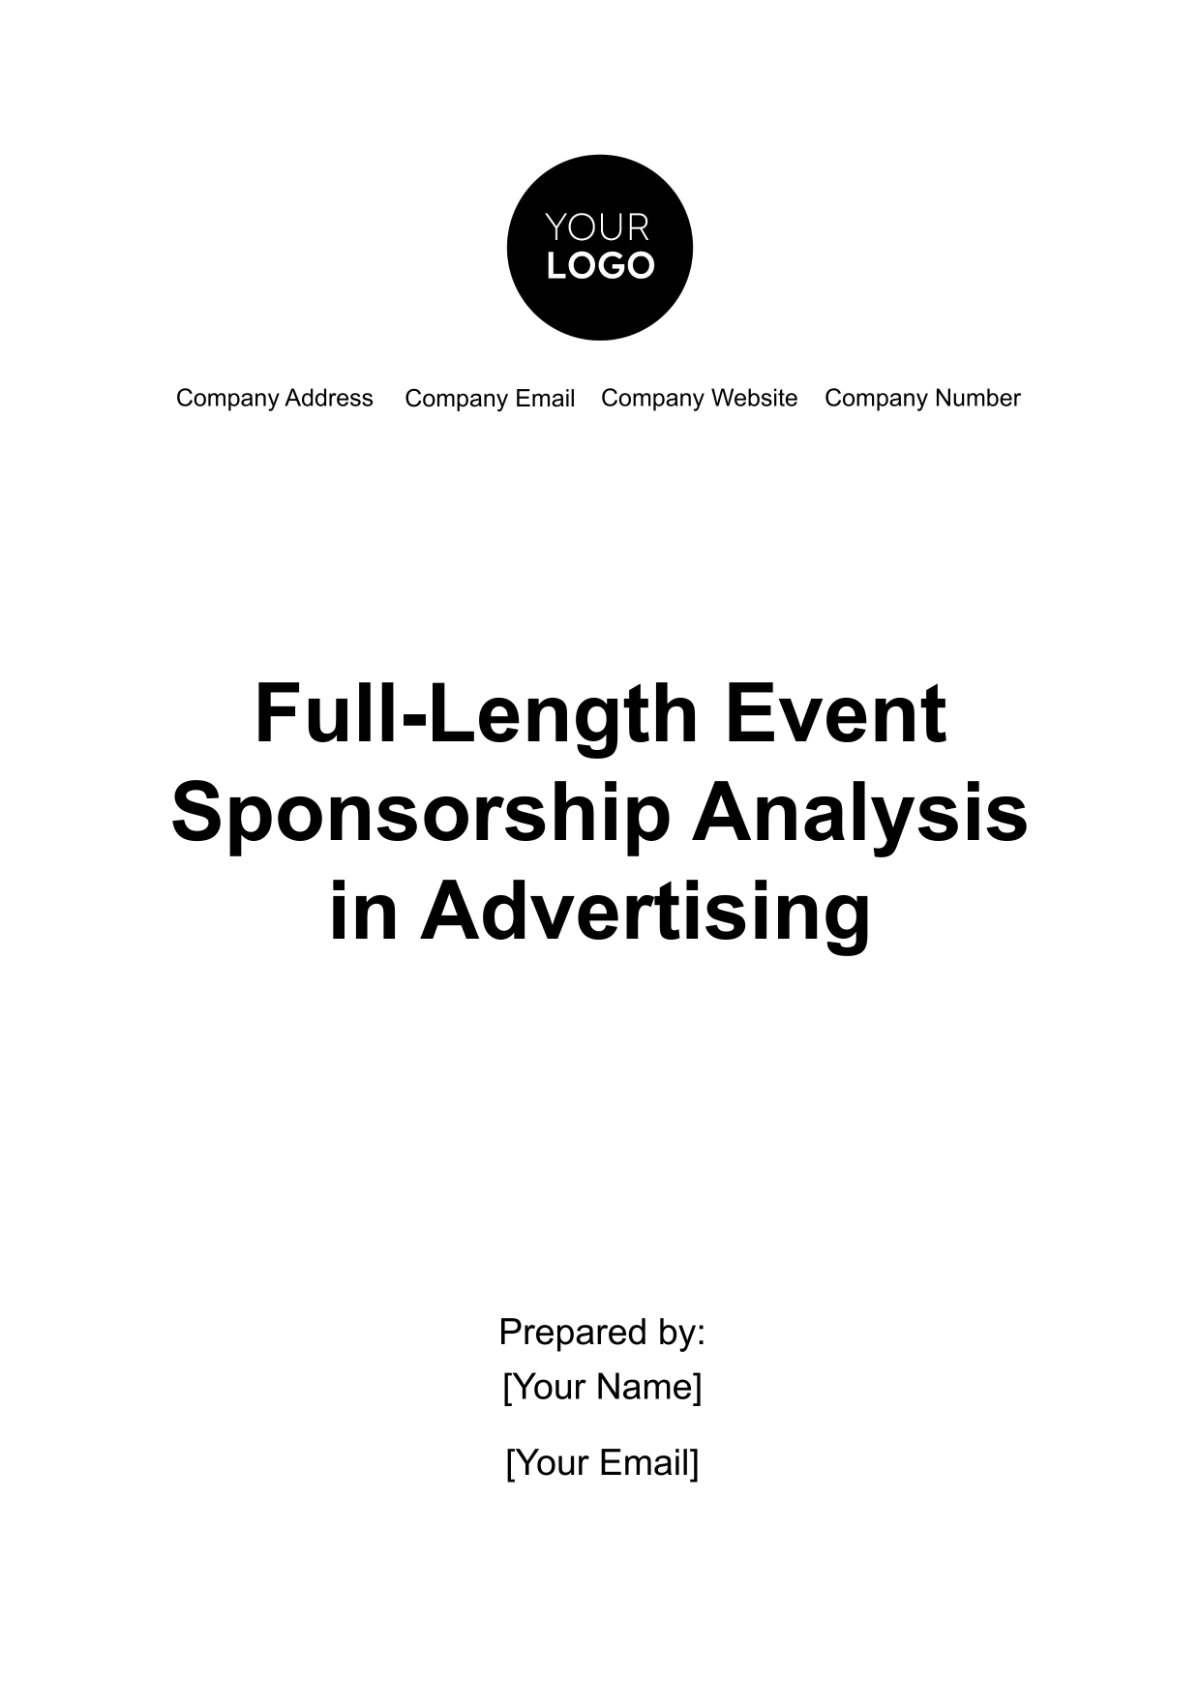 Free Full-Length Event Sponsorship Analysis in Advertising Template